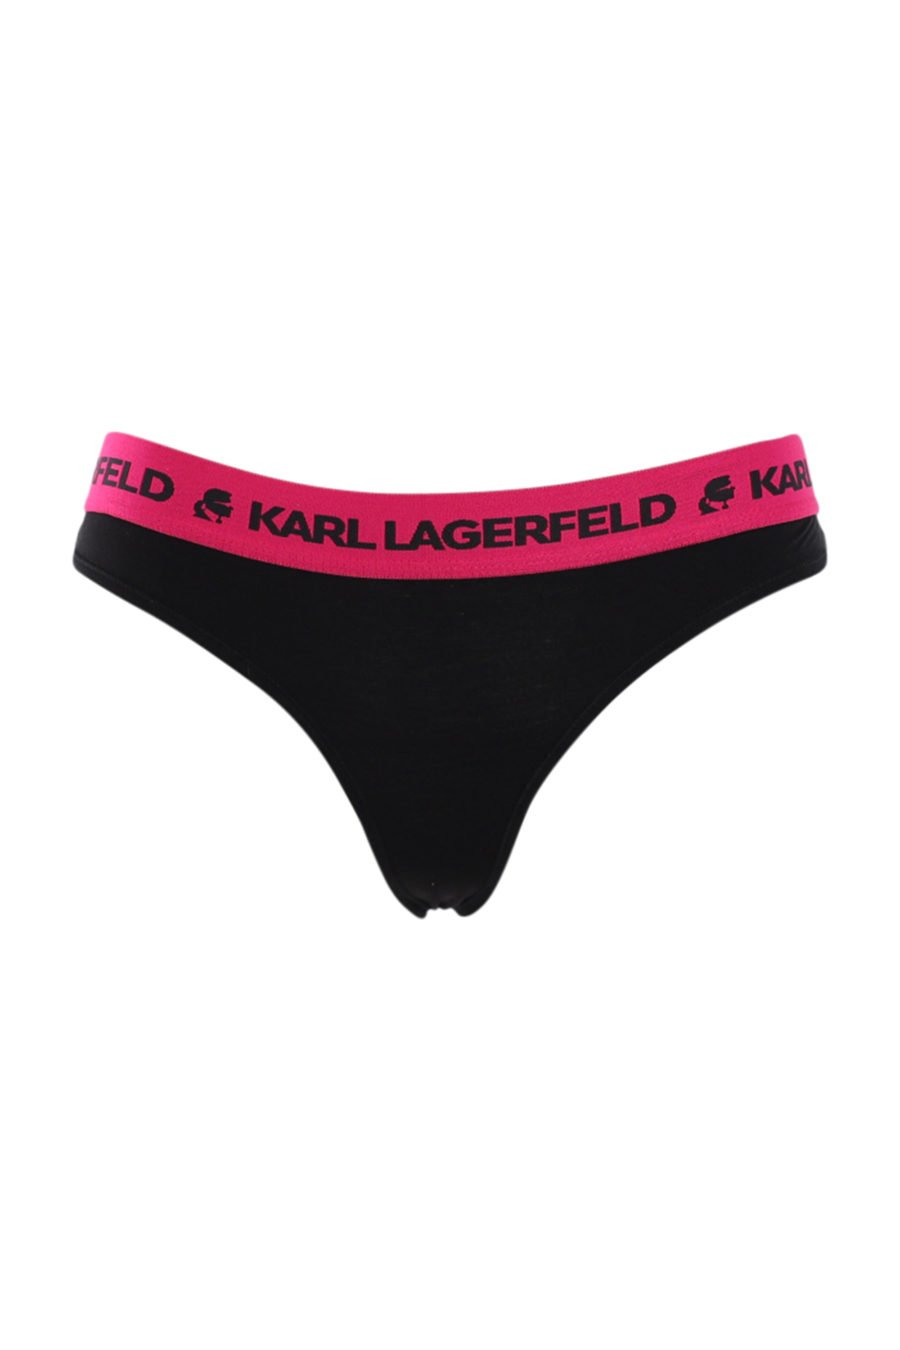 Women's Underwear by KARL LAGERFELD, New Arrivals, Clothing